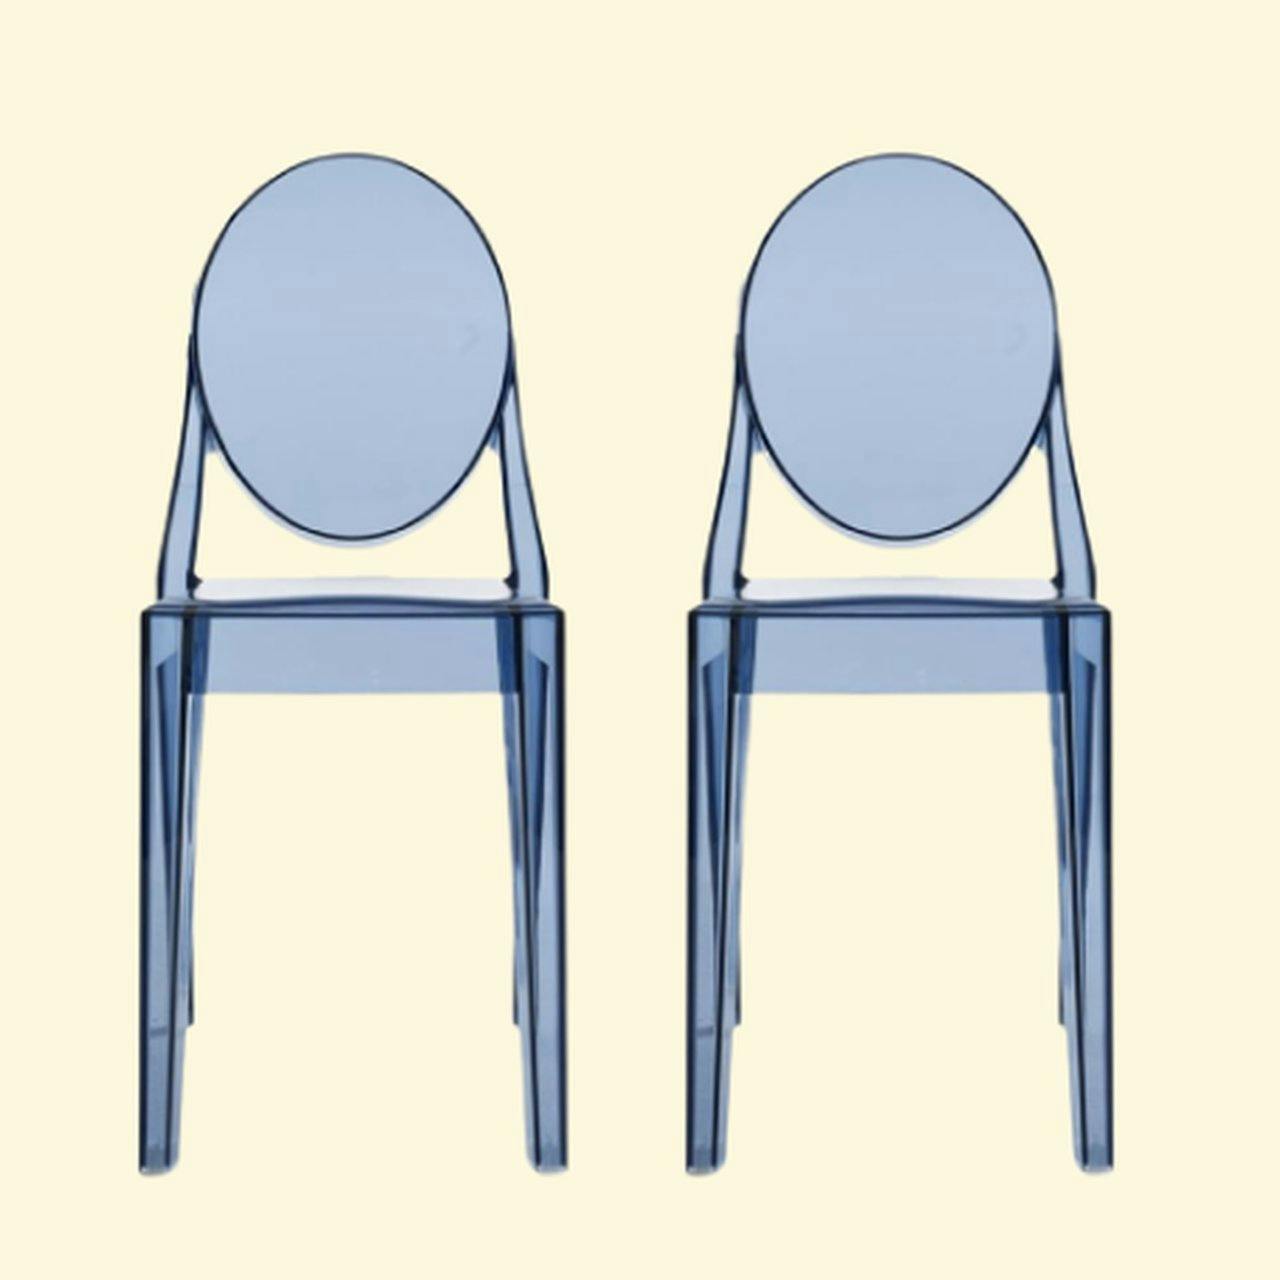 Giroflex Dining chairs